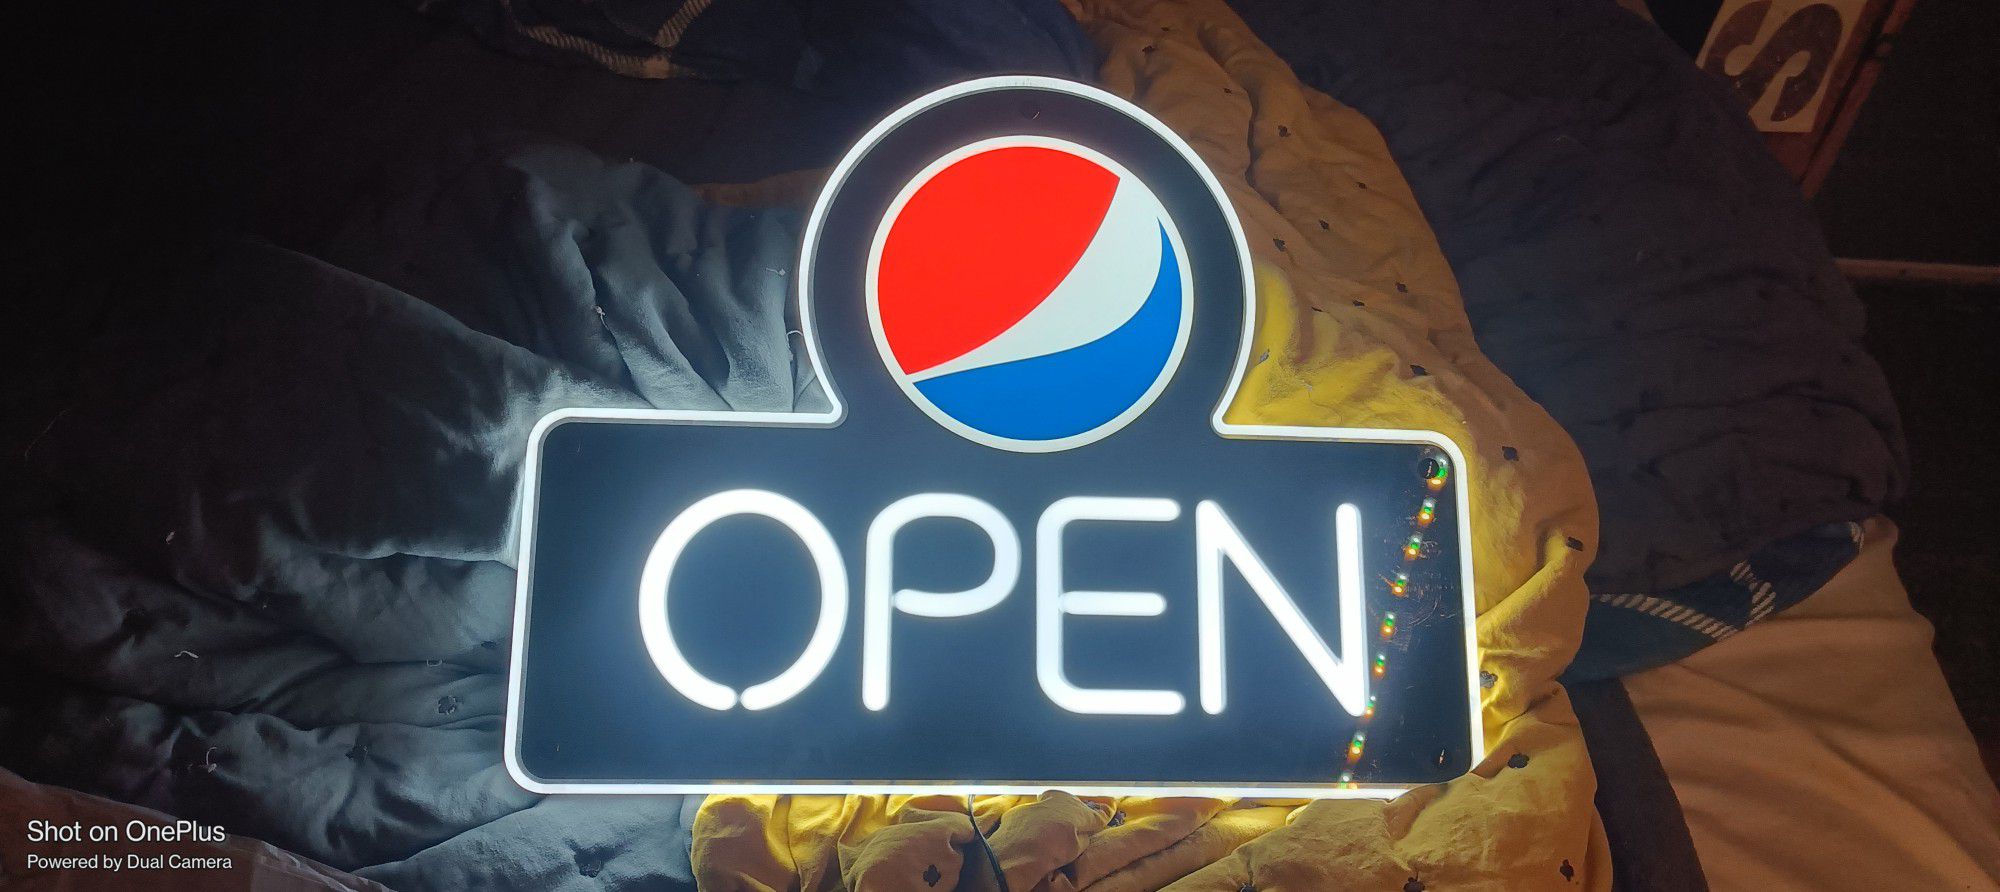  Pepsi Open Sign